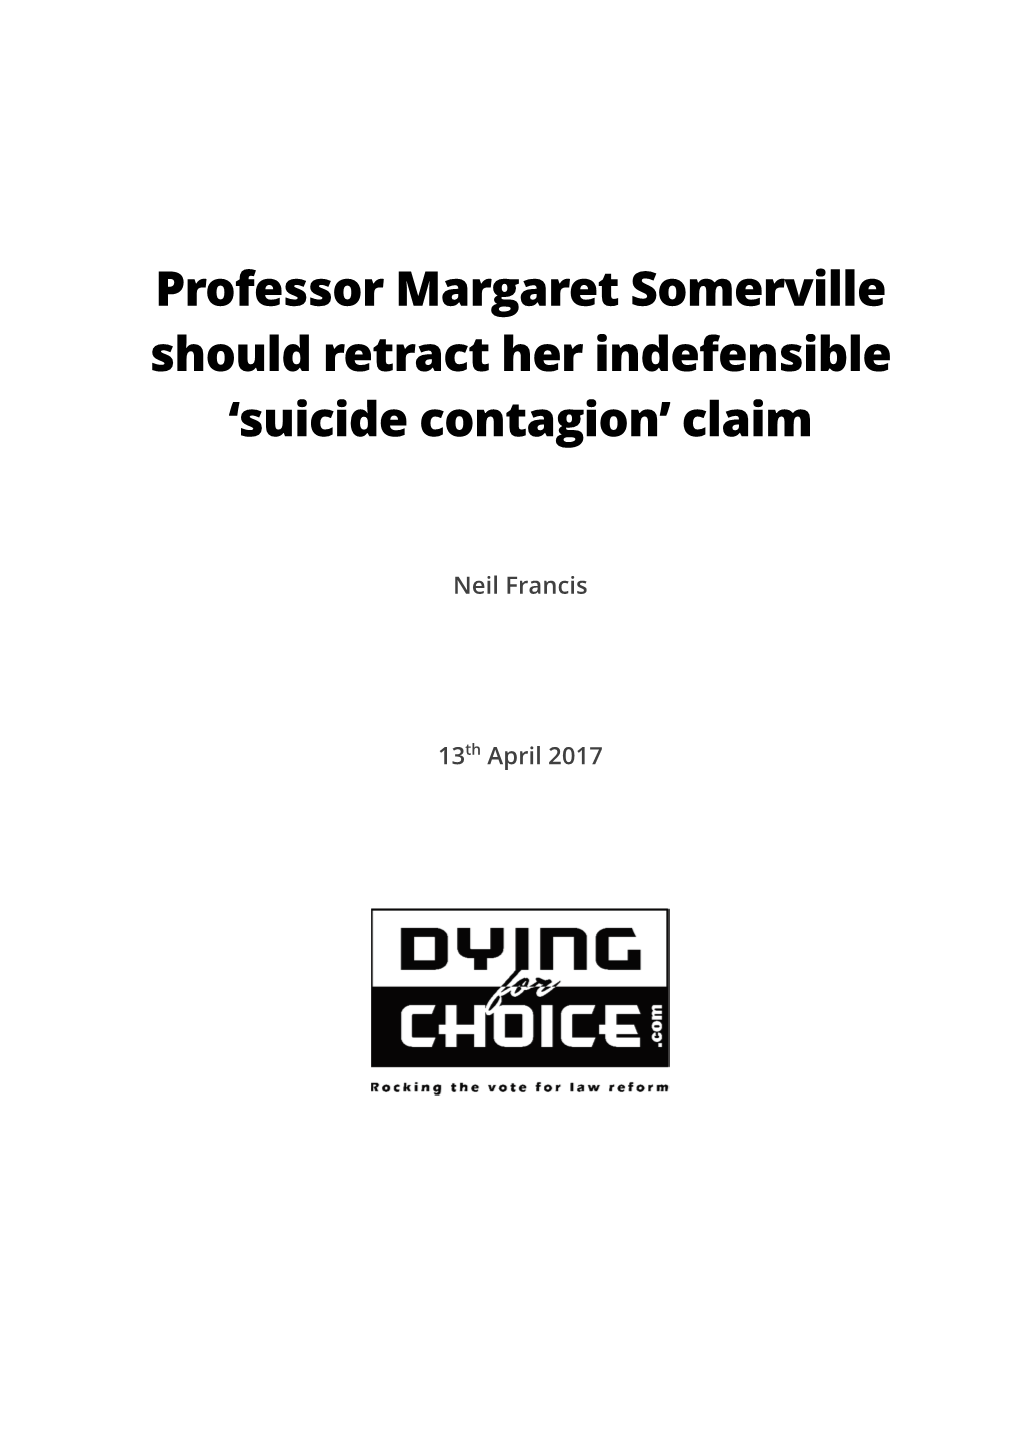 Professor Margaret Somerville Should Retract Her Indefensible ‘Suicide Contagion’ Claim